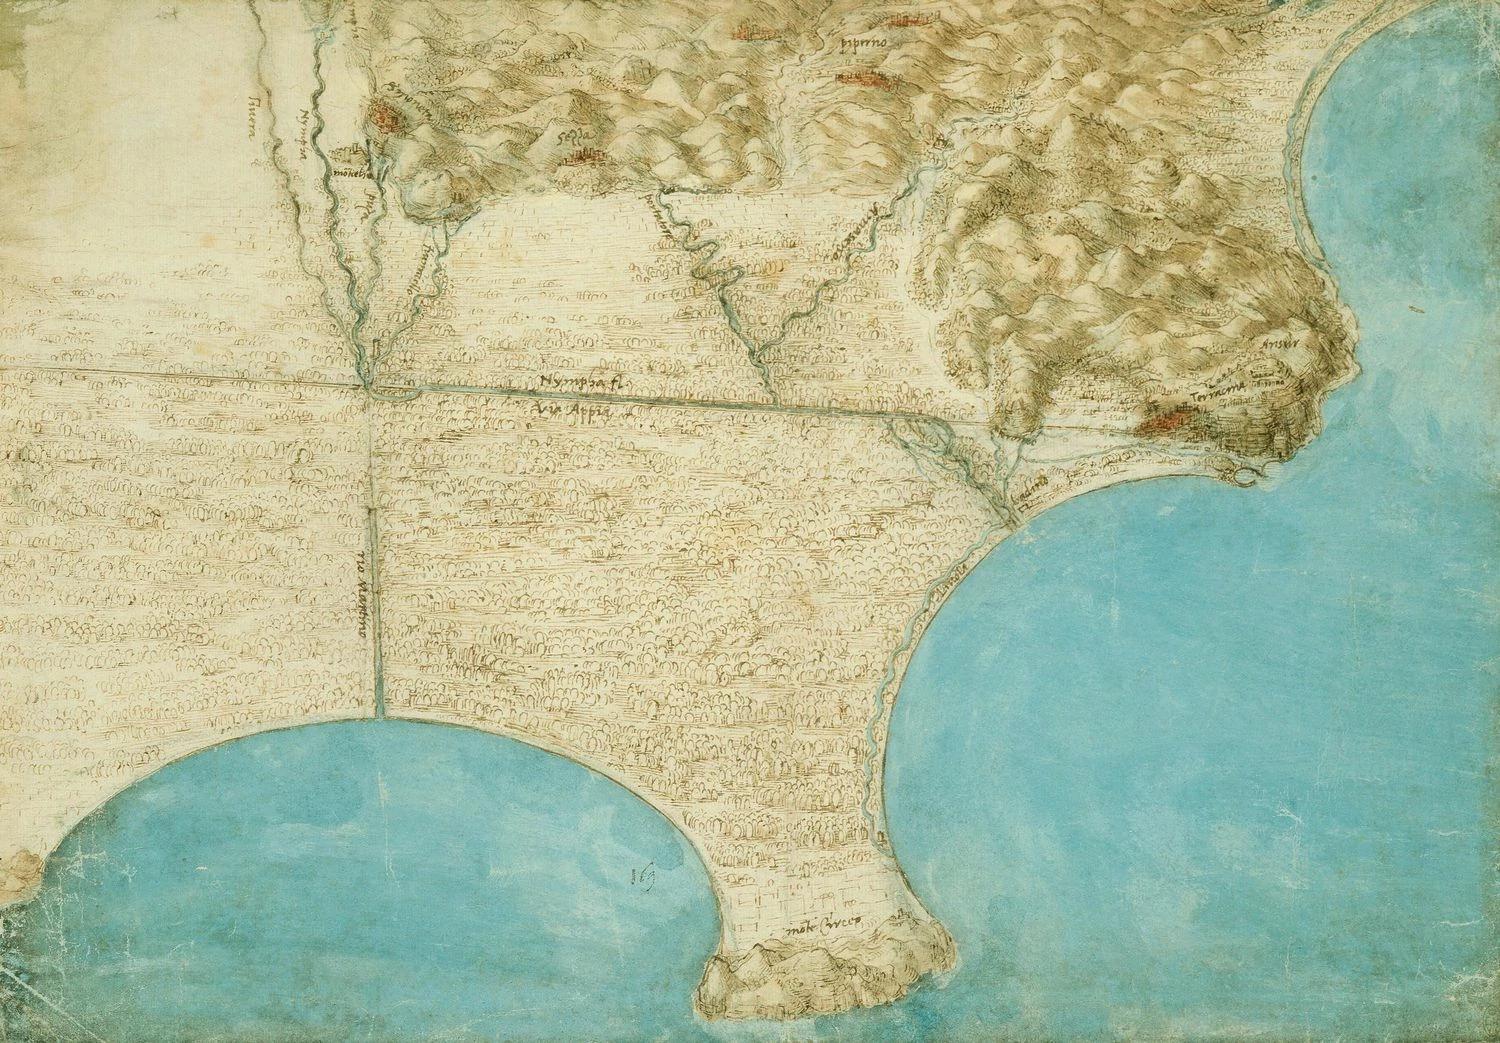 A map of the Pontine marshes, Leonardo da Vinci